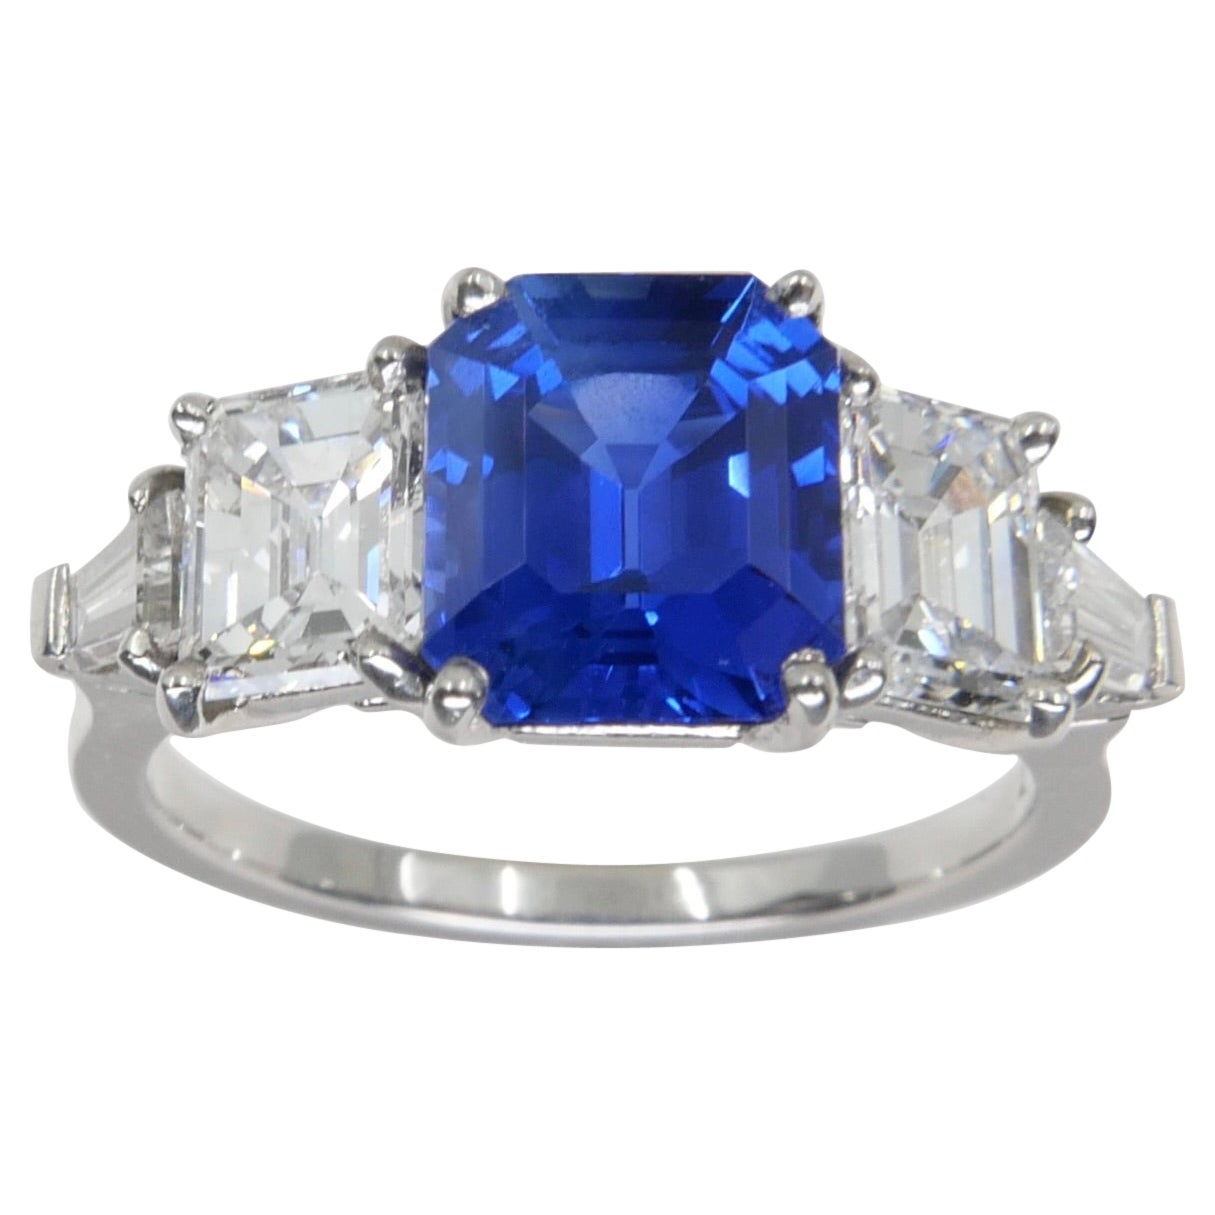 Certified Kashmir No Heat Sapphire & Diamond Ring, SSEF & Gubelin Labs